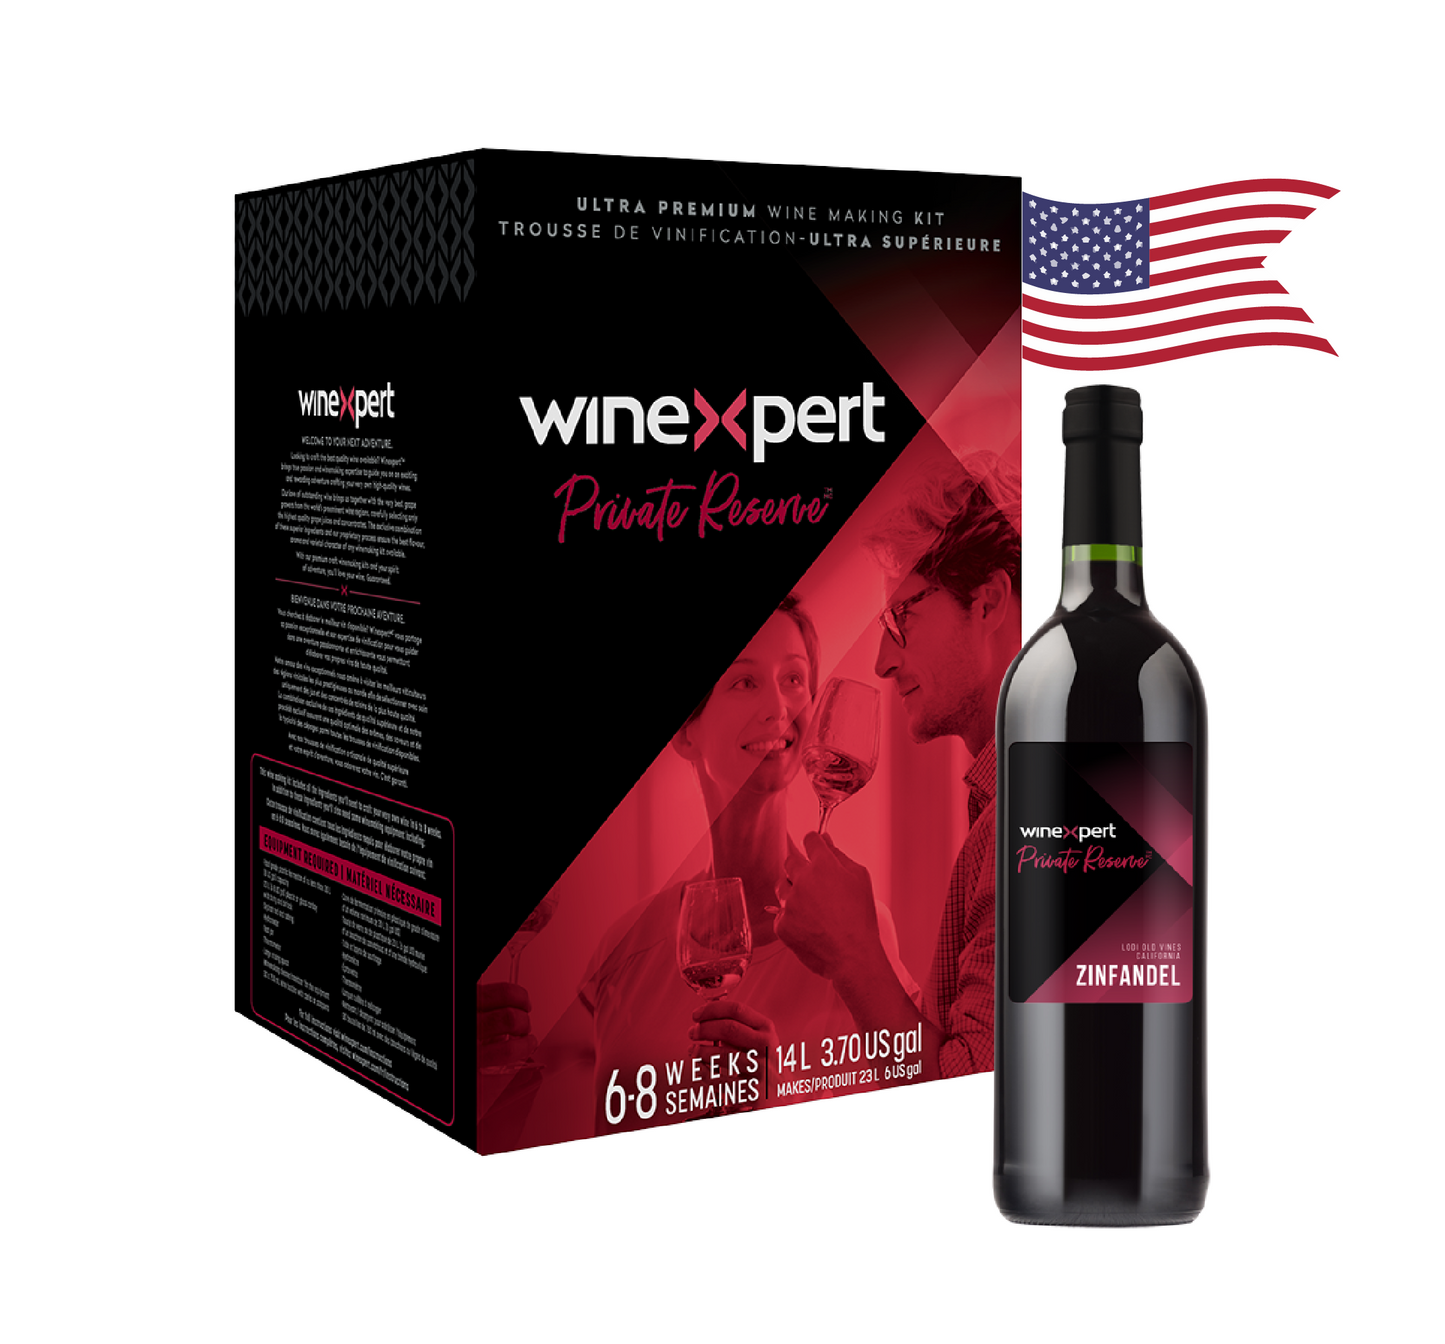 Winexpert Private Reserve Old Vines Zinfandel - Lodi, California